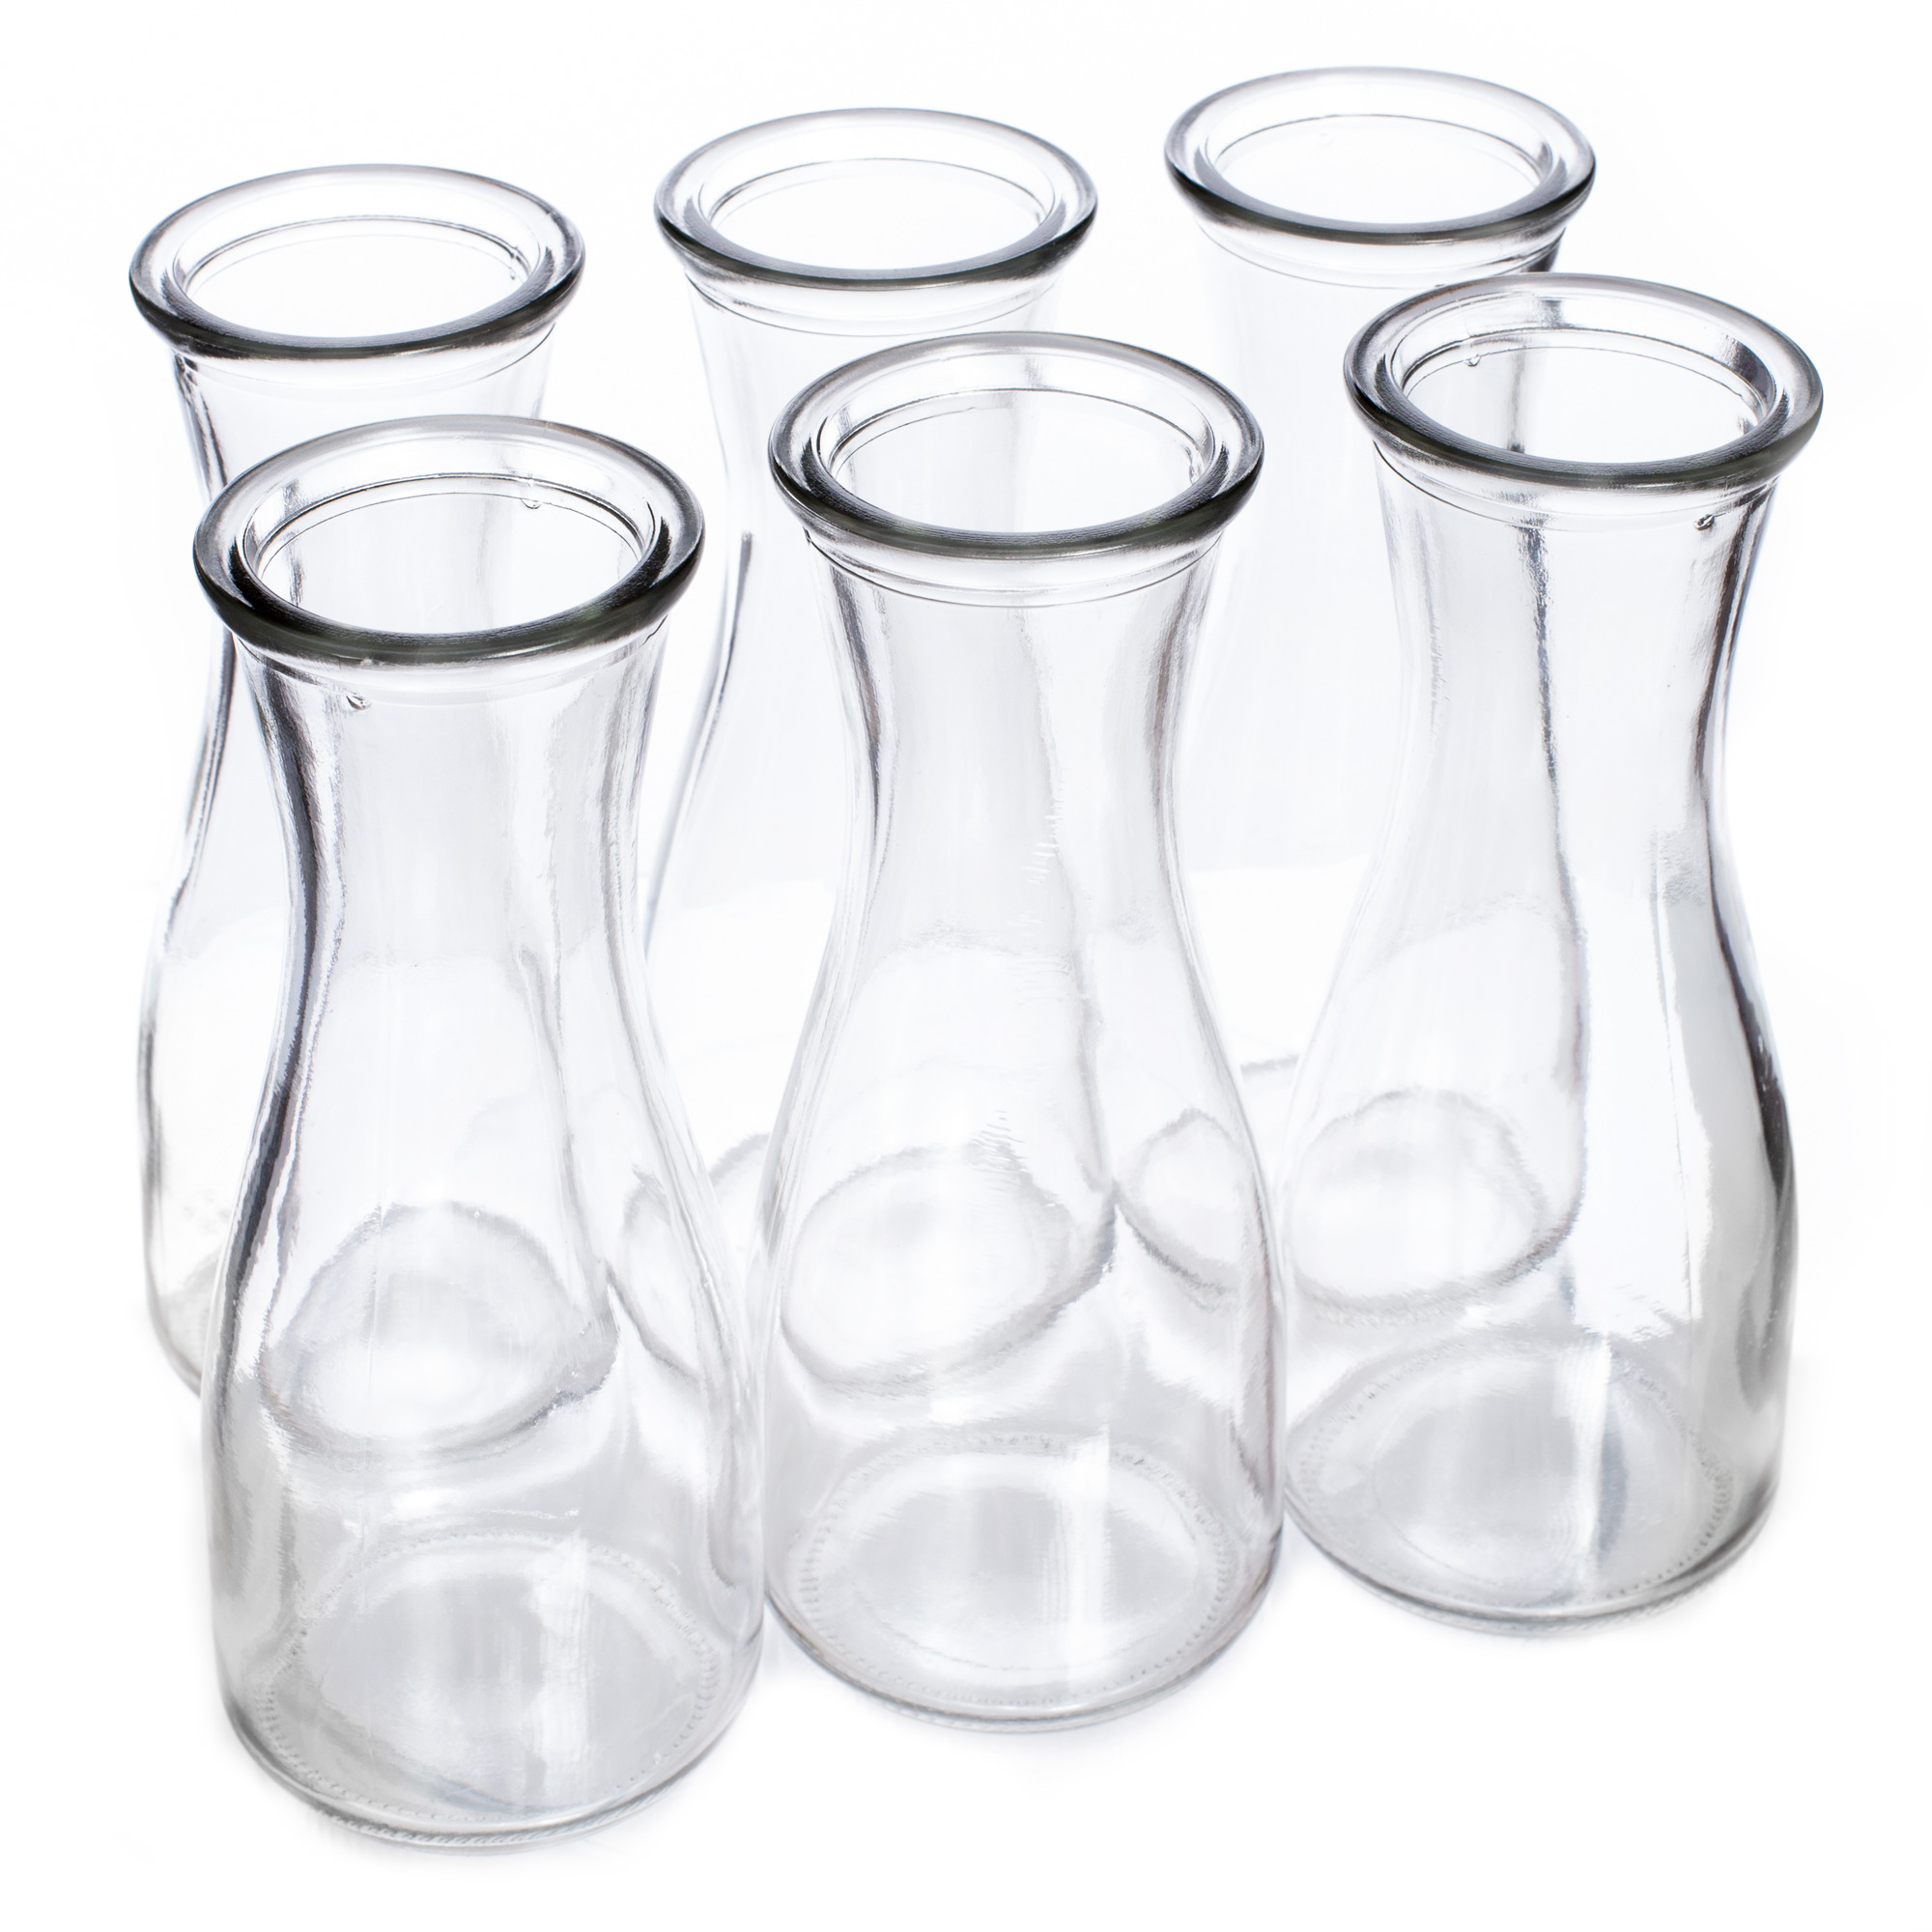 12 oz. (350mL) Glass Beverage Carafe, 6-pack